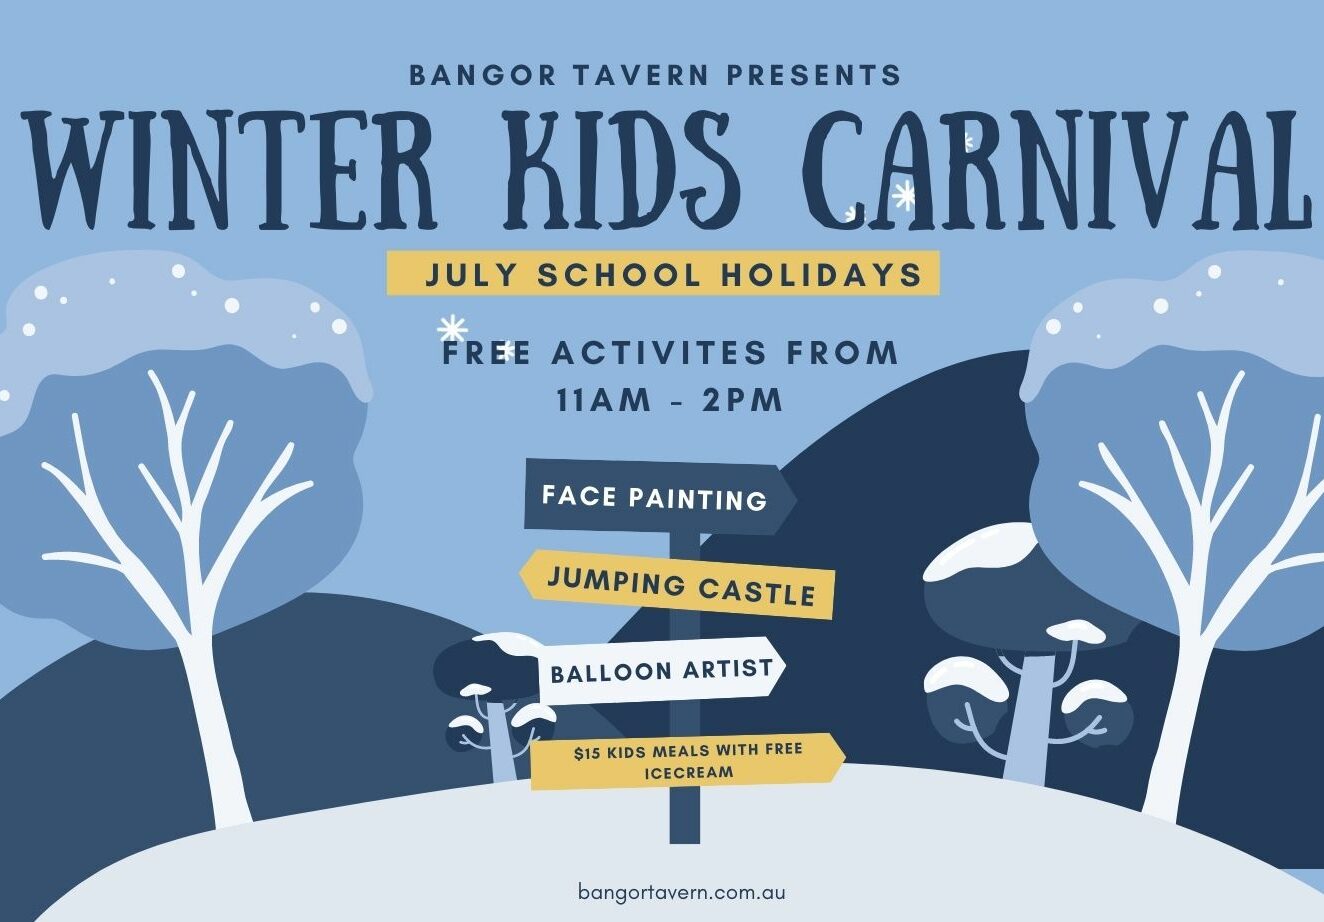 Bangor Tavern’s Winter Kids Carnival